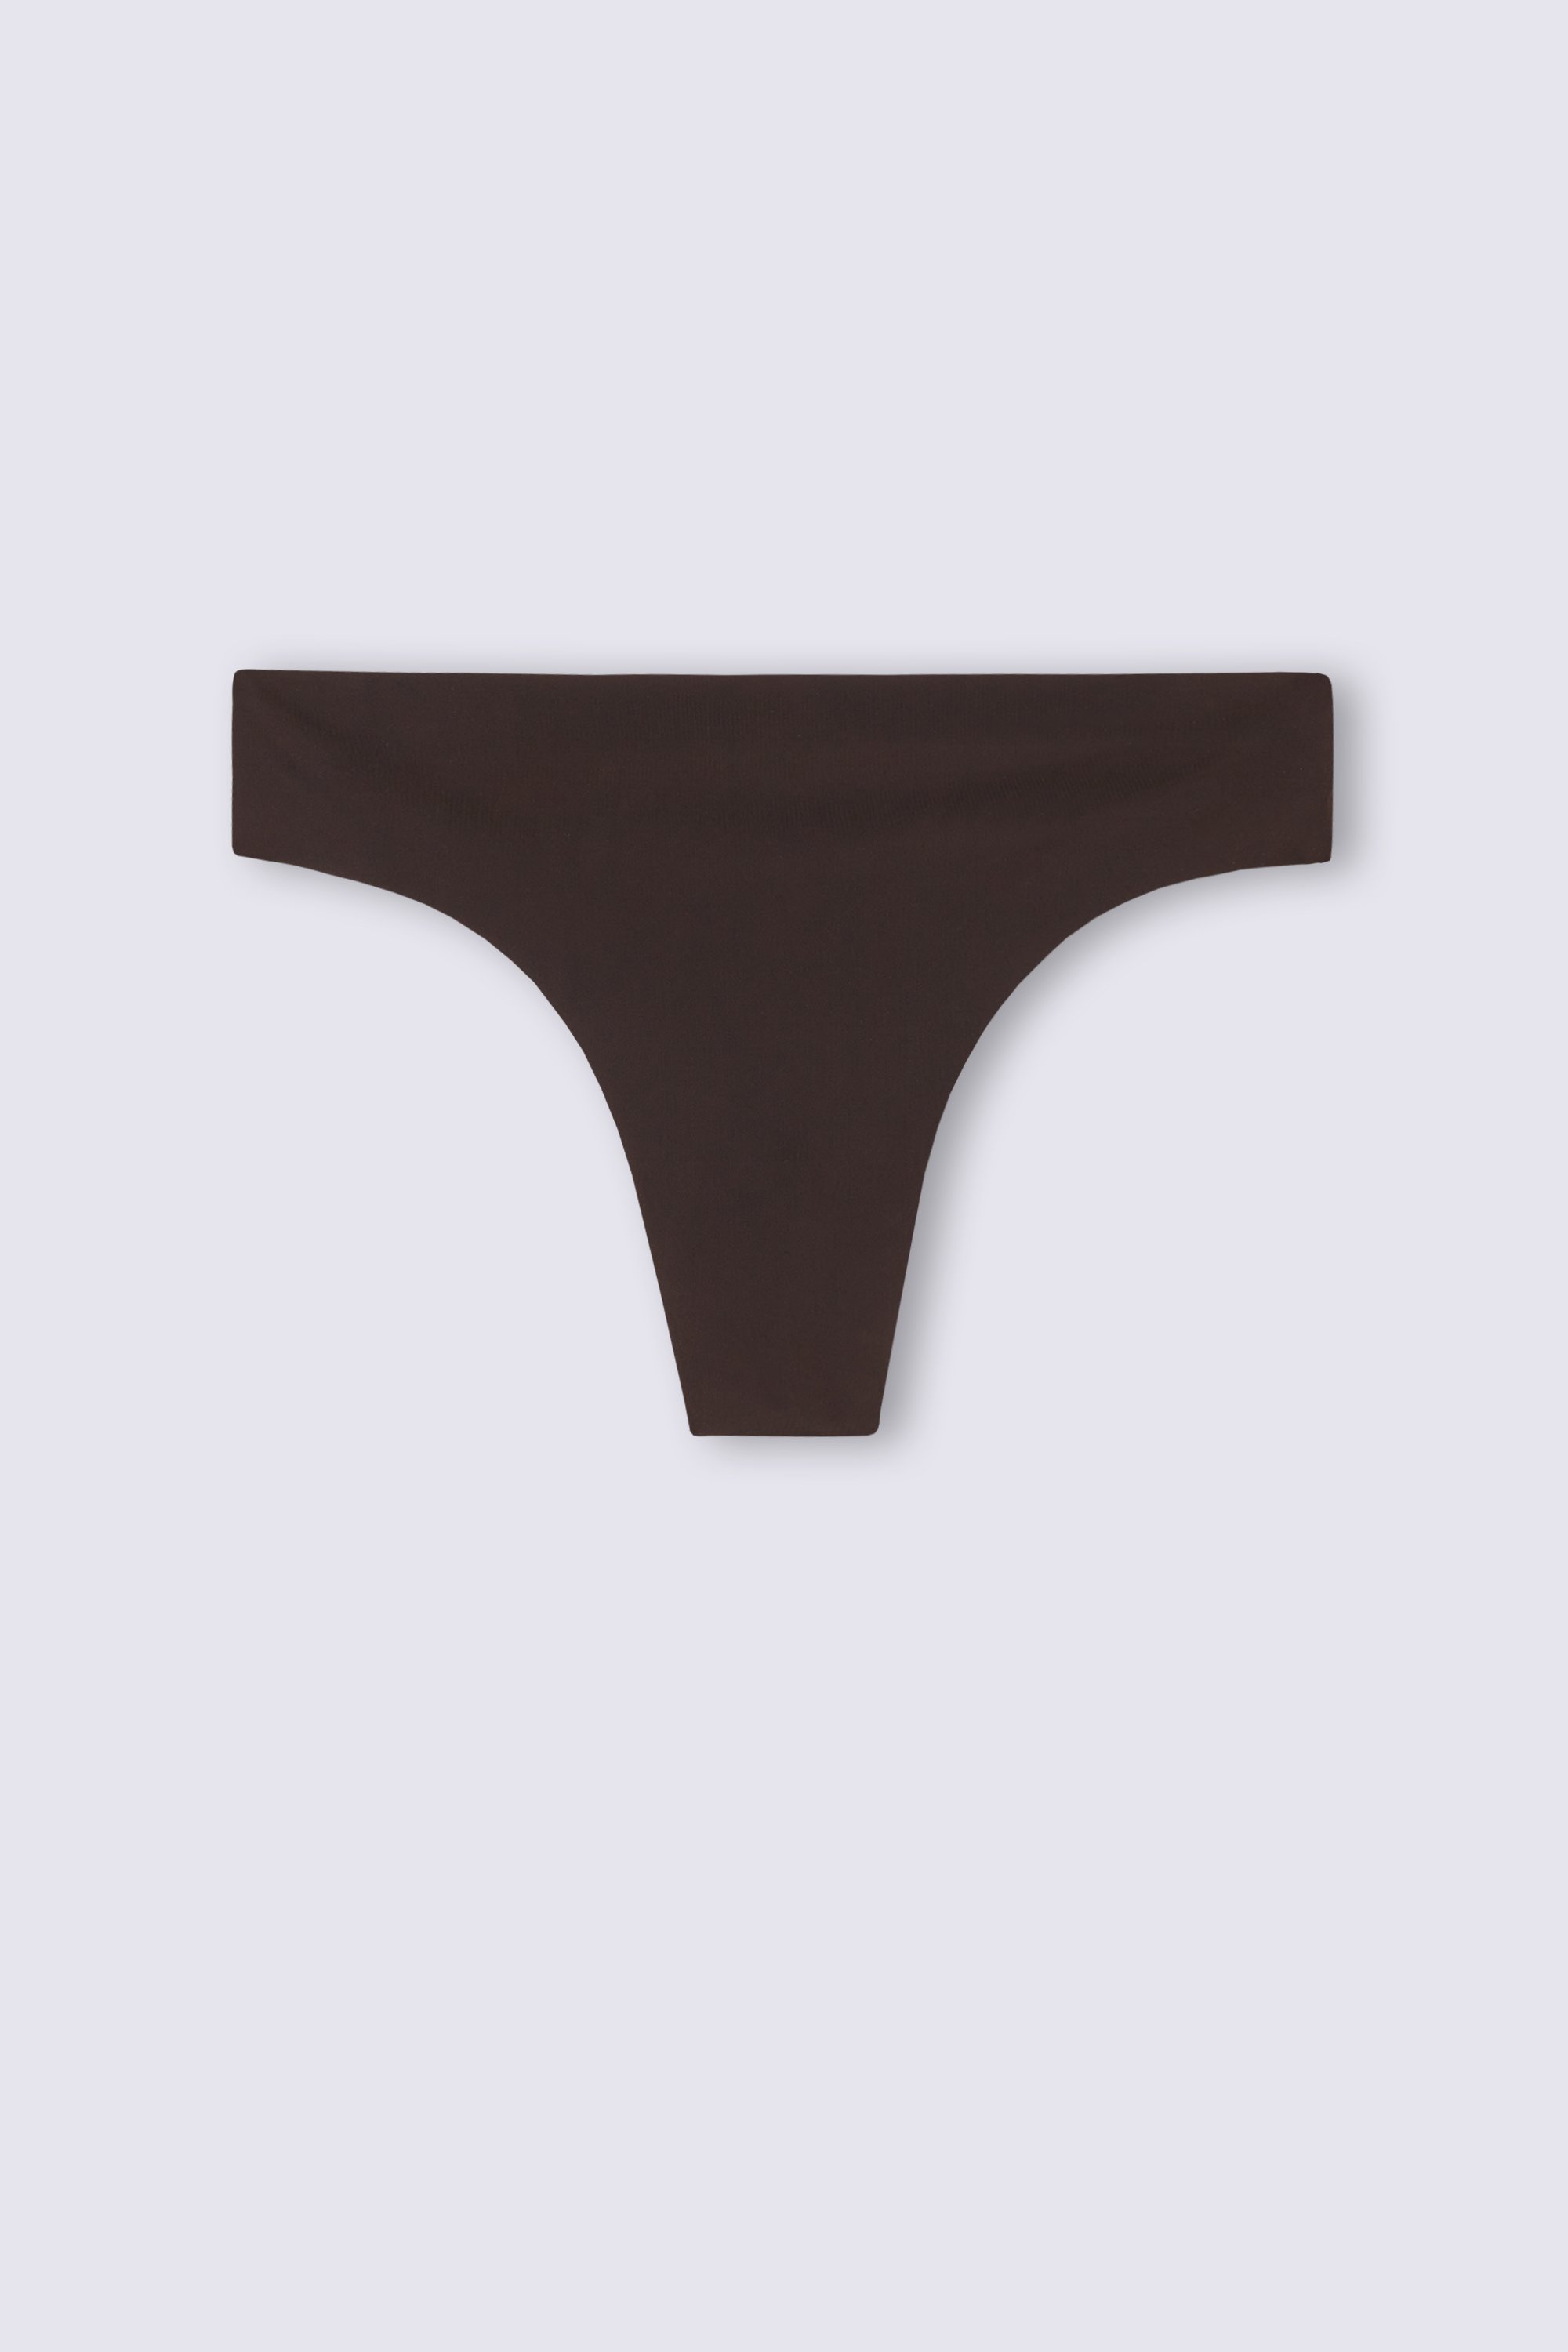 Brazilian panties with adjustable straps Mediolano Naked 19064 buy